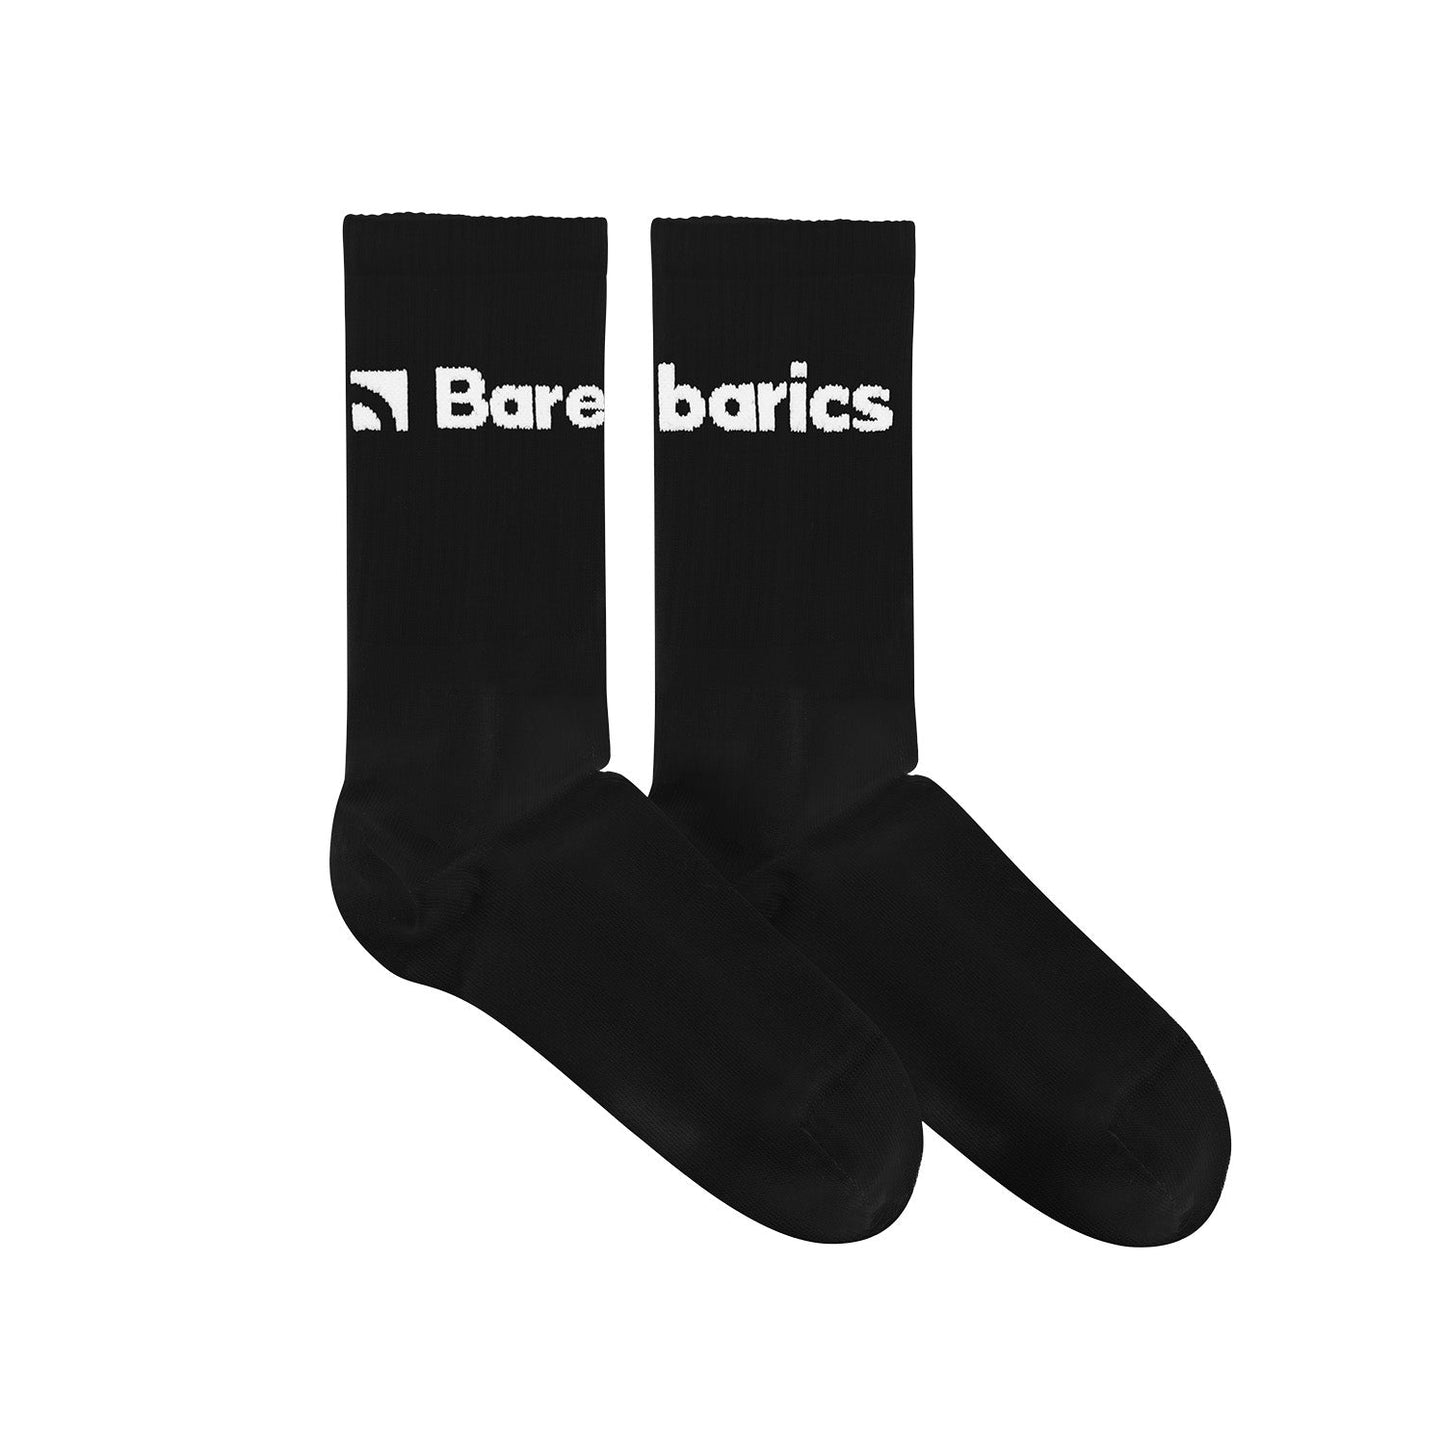 Barebarics - Calcetines Barefoot - Crew - Black - Big logo